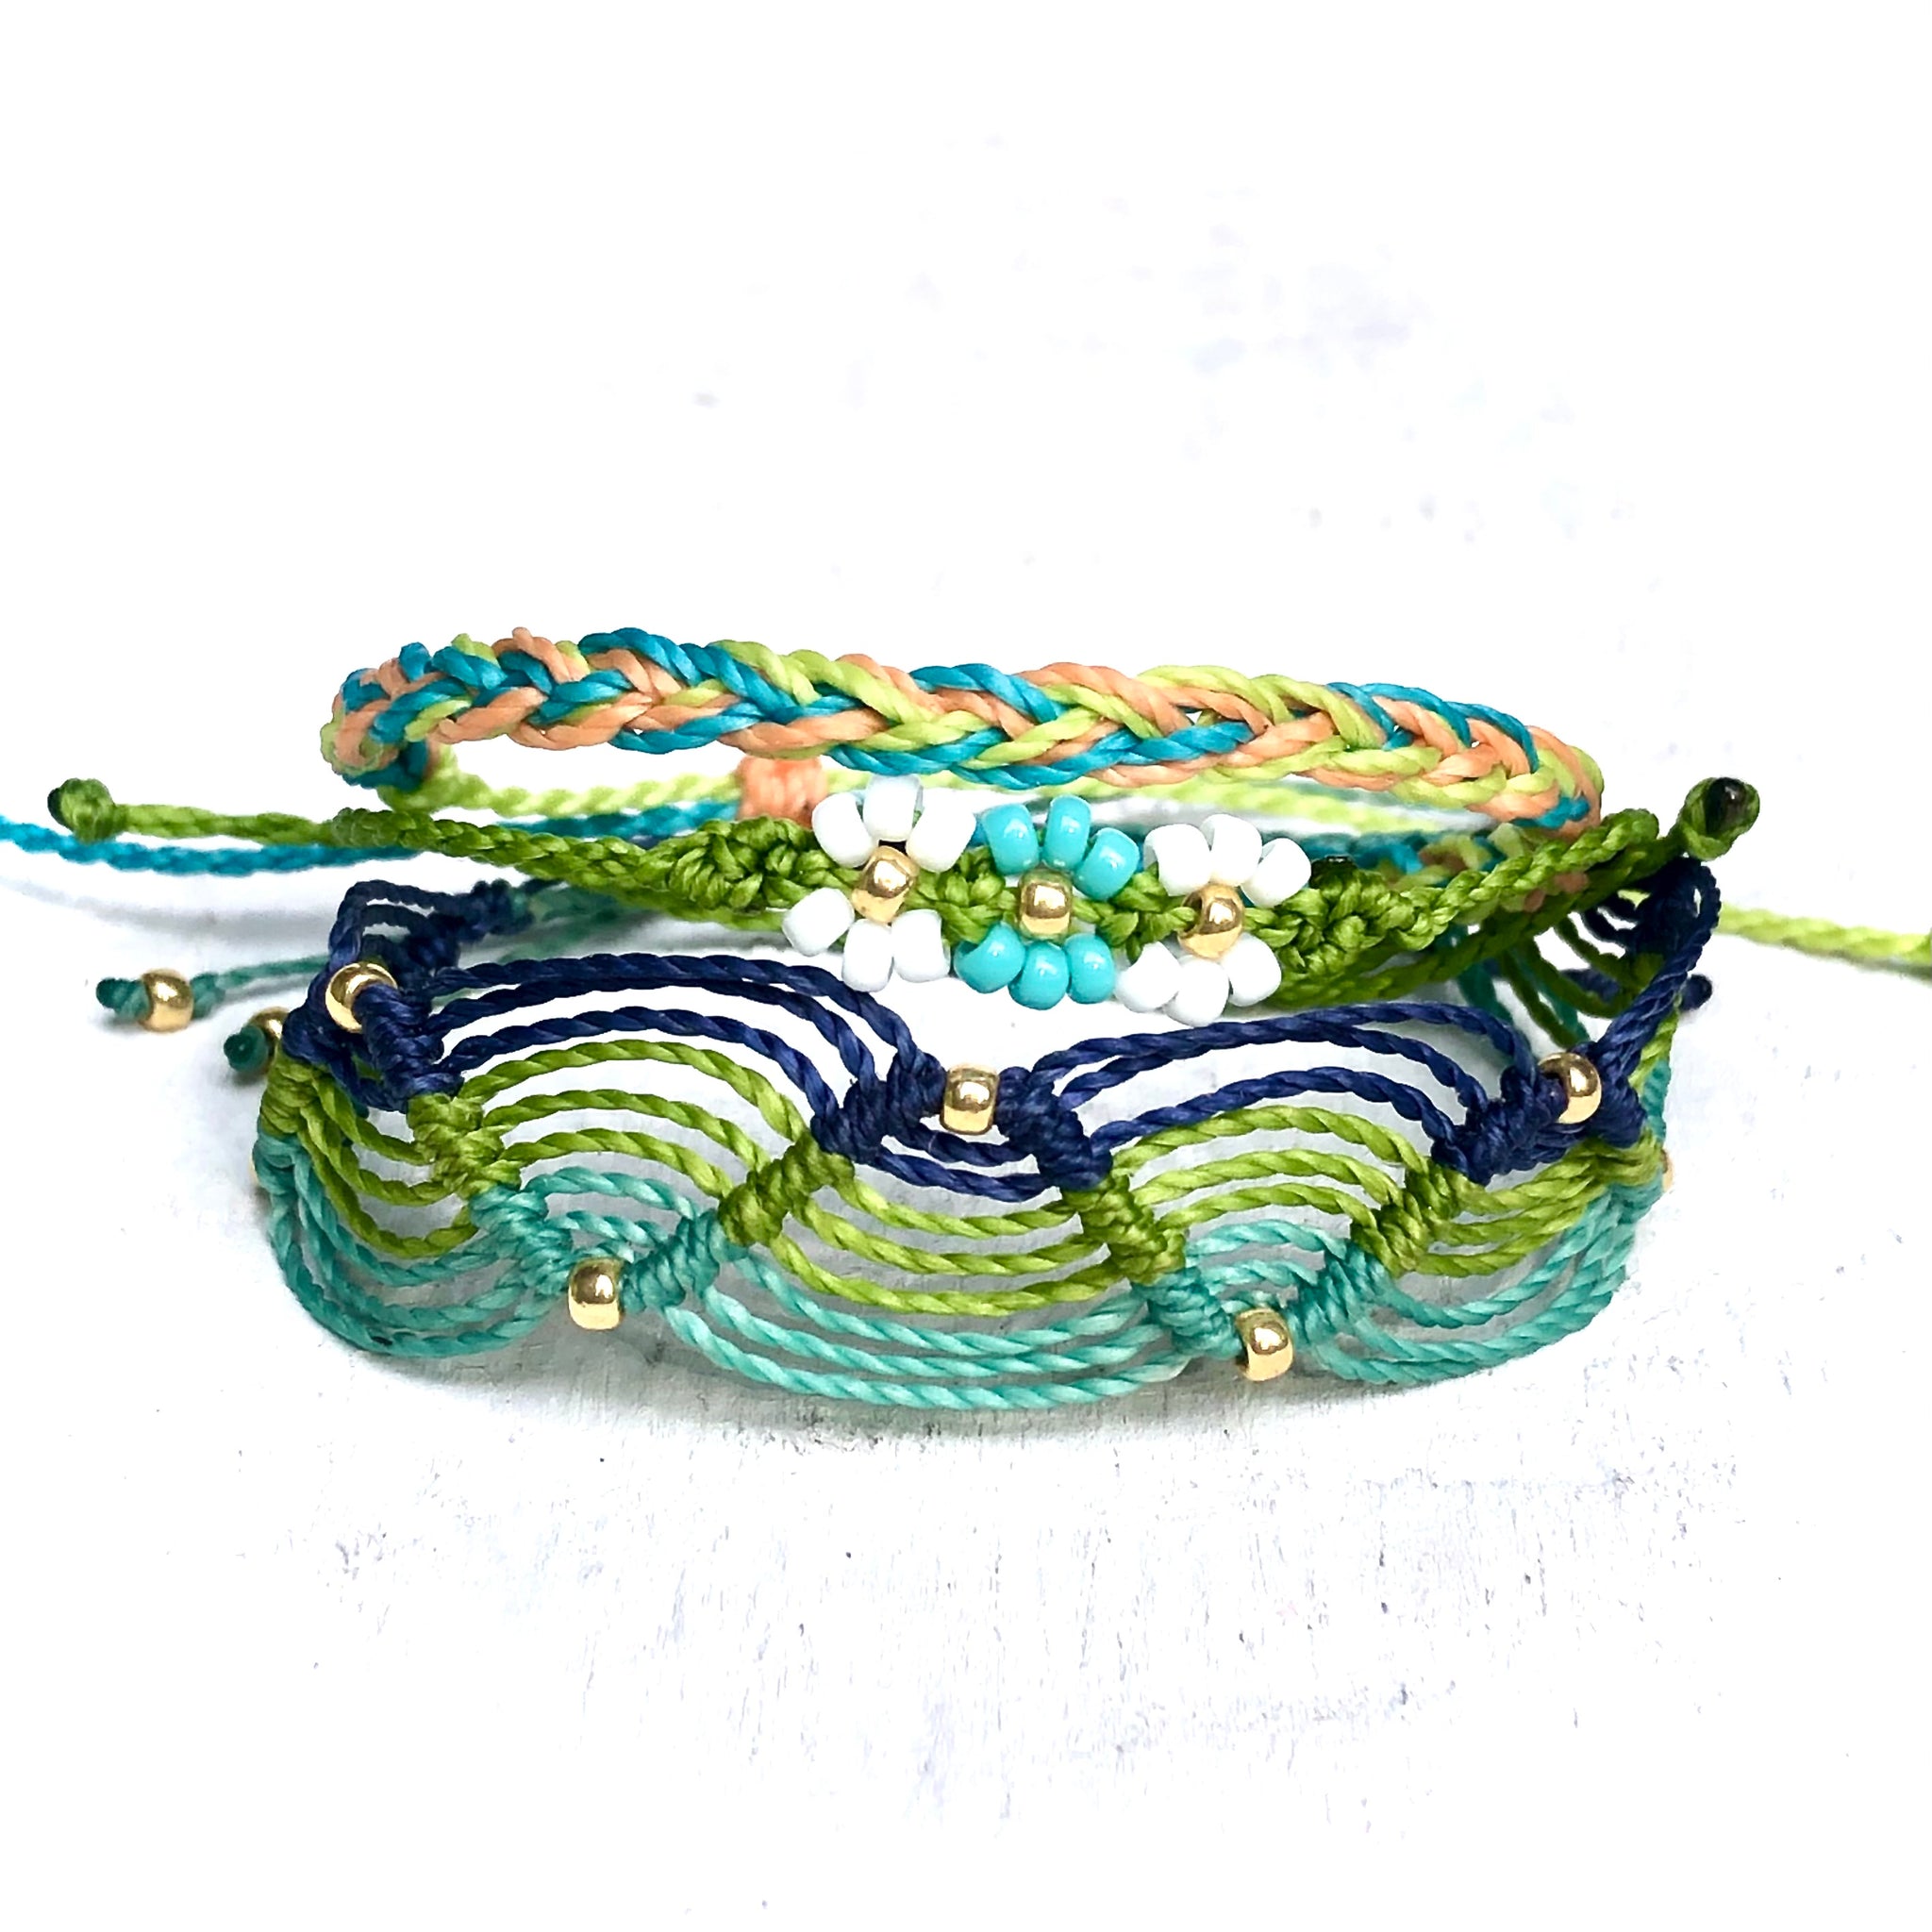 Daisy Macrame Bracelet Set - Pick your favorite string colors!